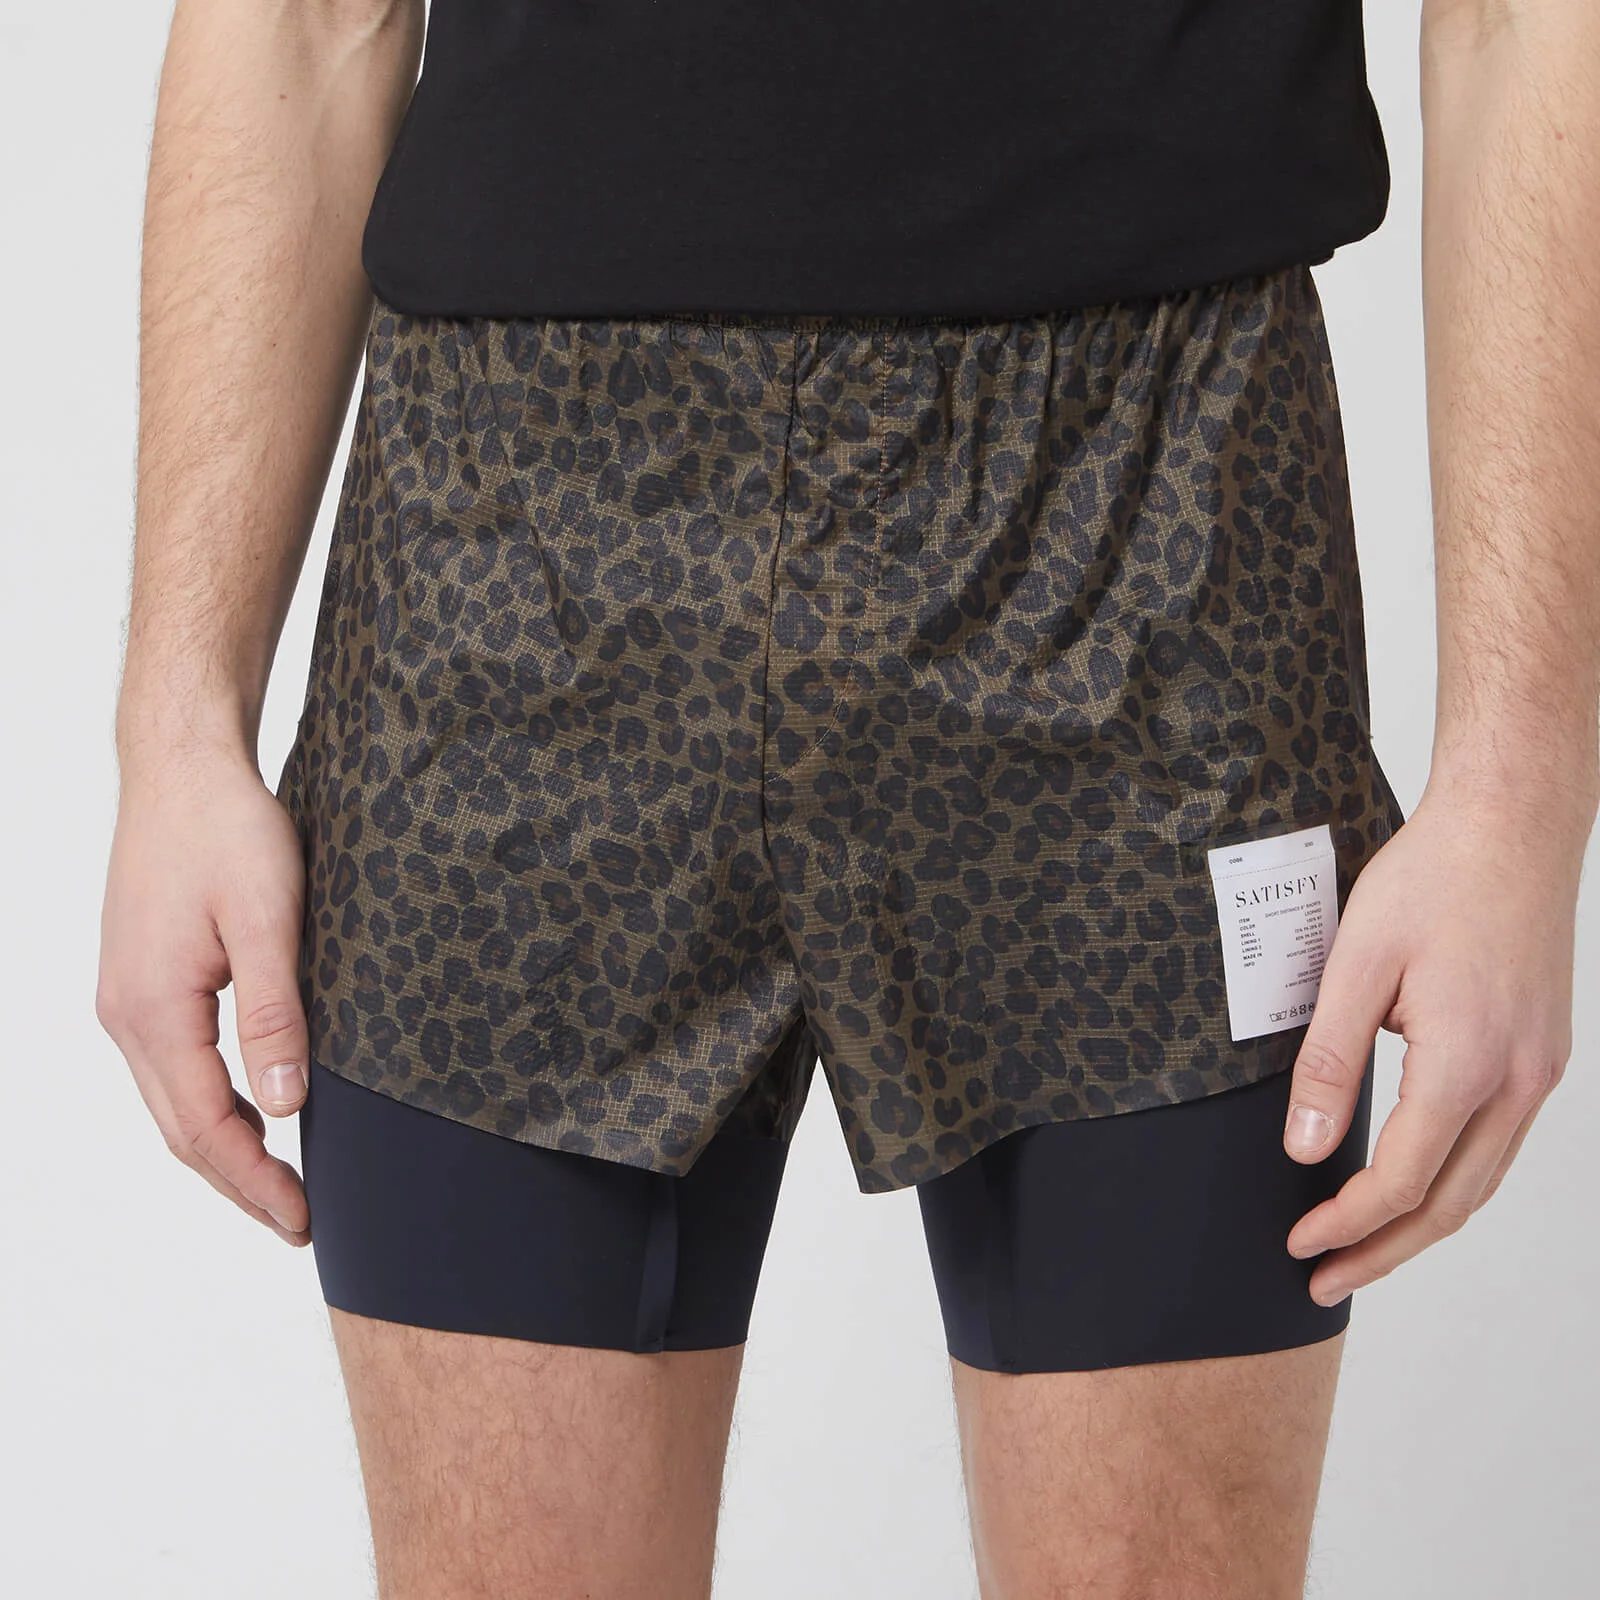 Satisfy Men's Short Distance 8 Inch Shorts - Leopard Image 1